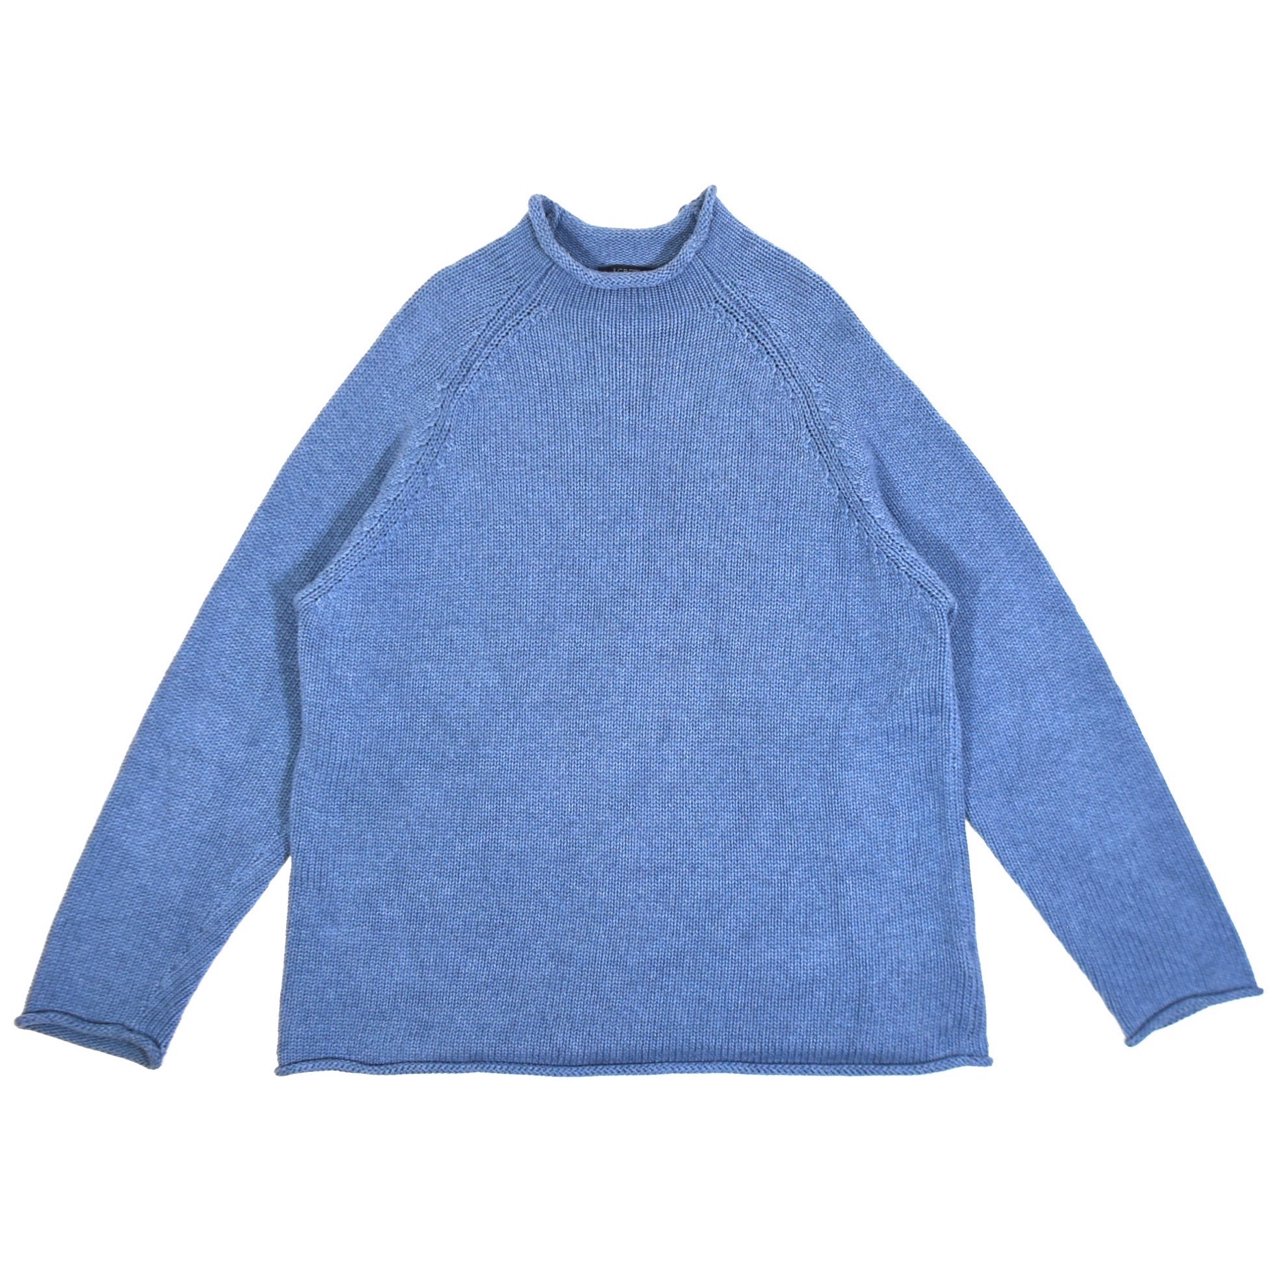 2010s J.CREW Cotton knit sweater L Light blue